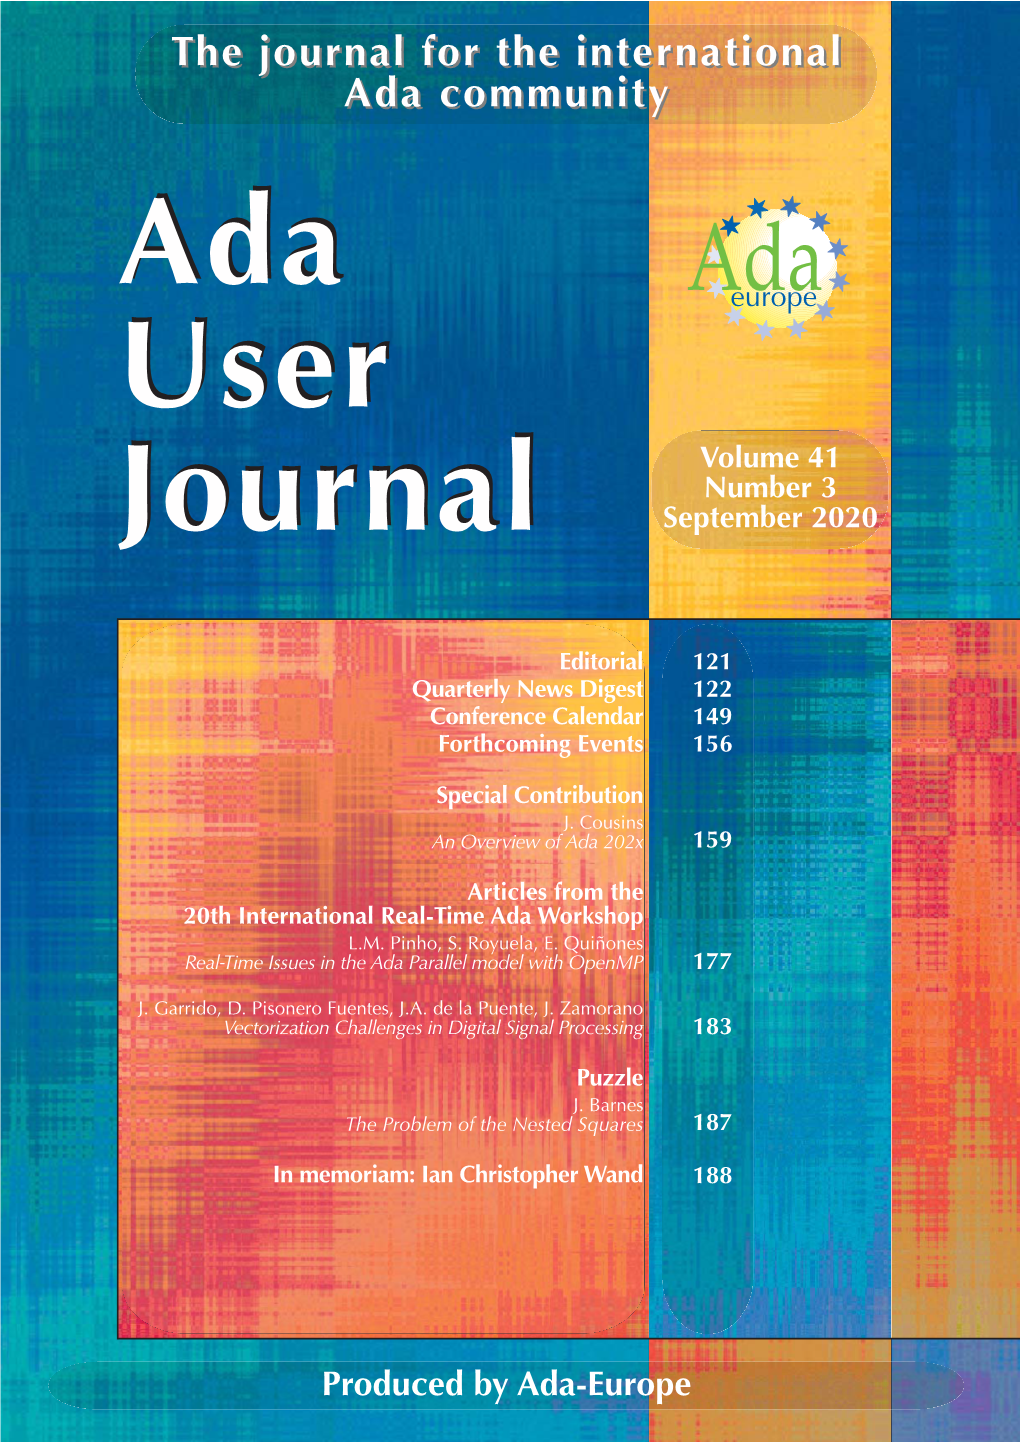 An Overview of Ada 202X 159